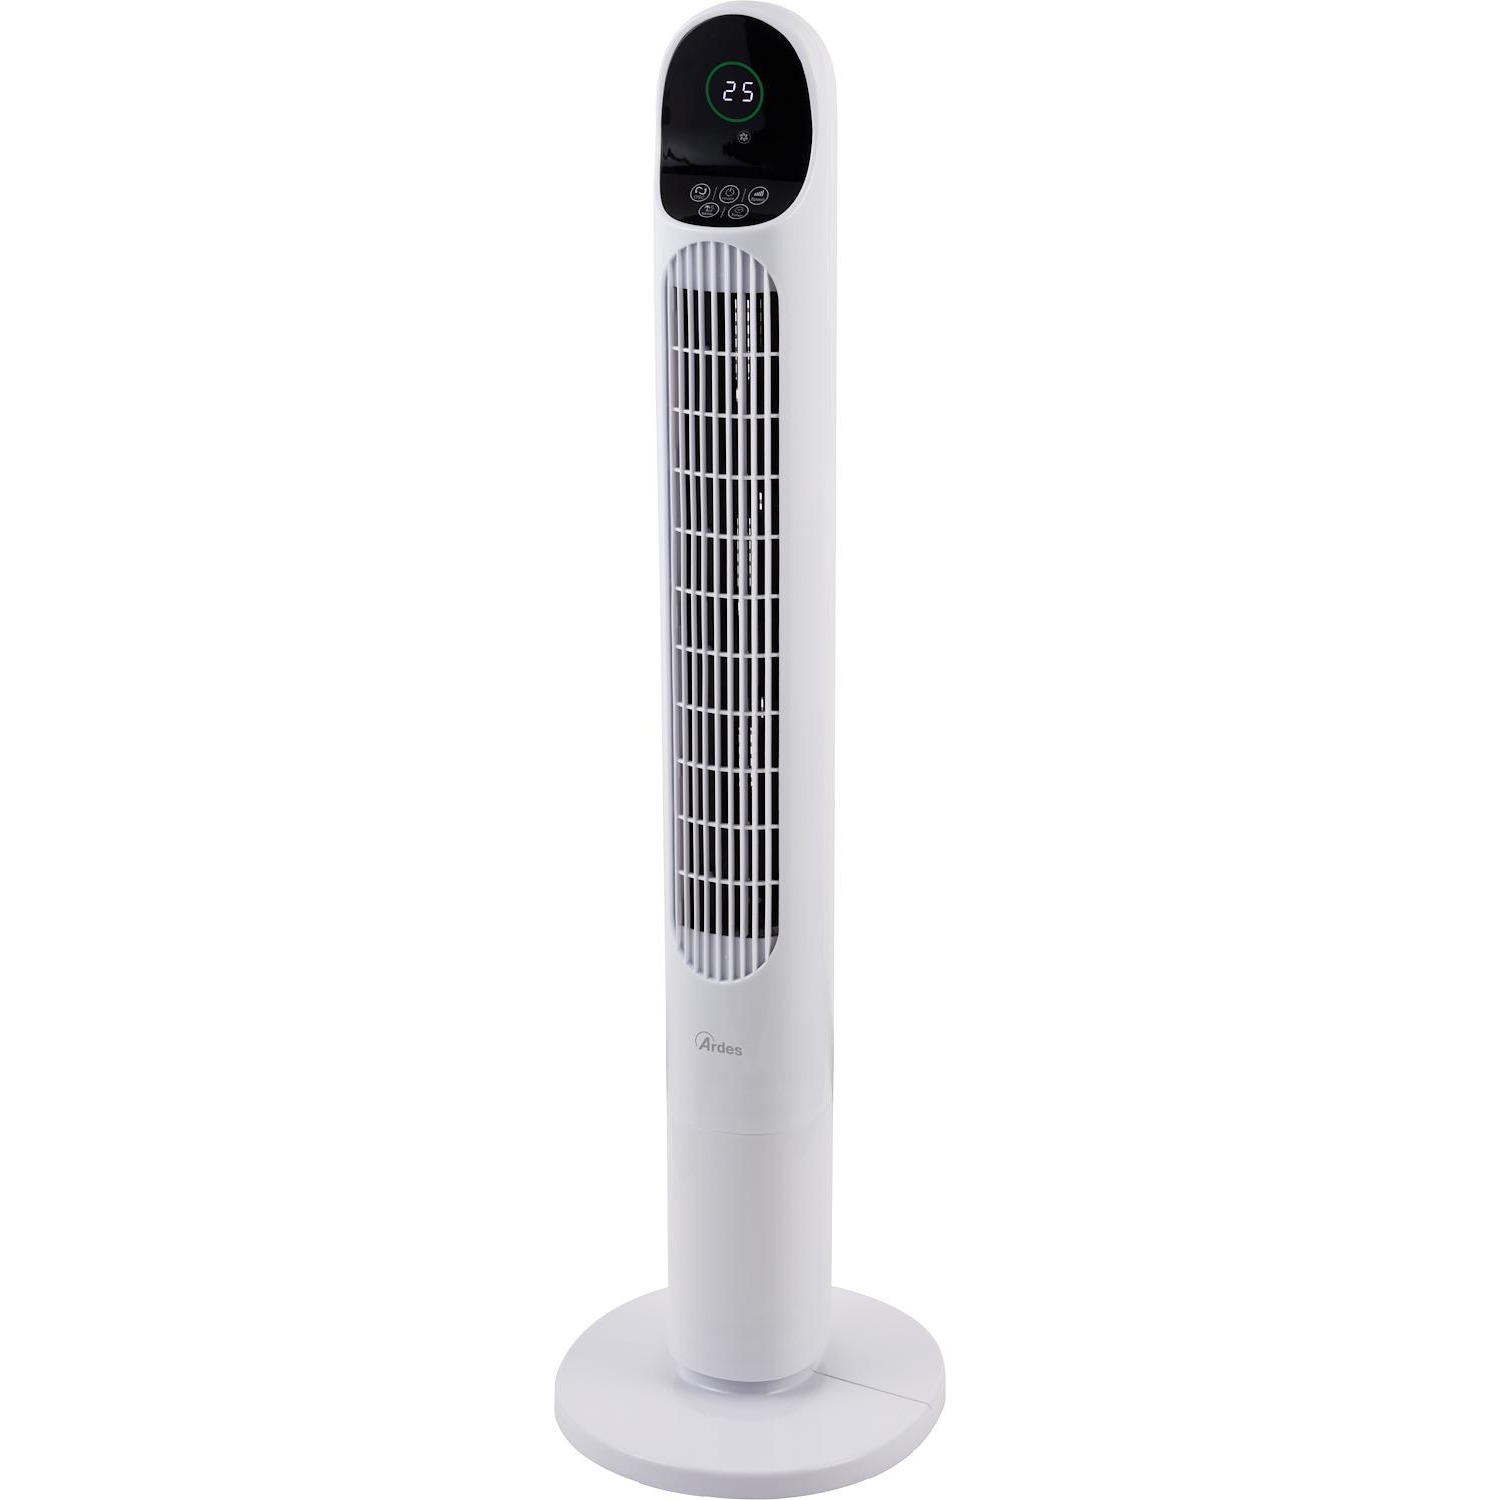 Immagine per Ventilatore a torre Ardes ORACLE HRC bianco con display LCD da DIMOStore